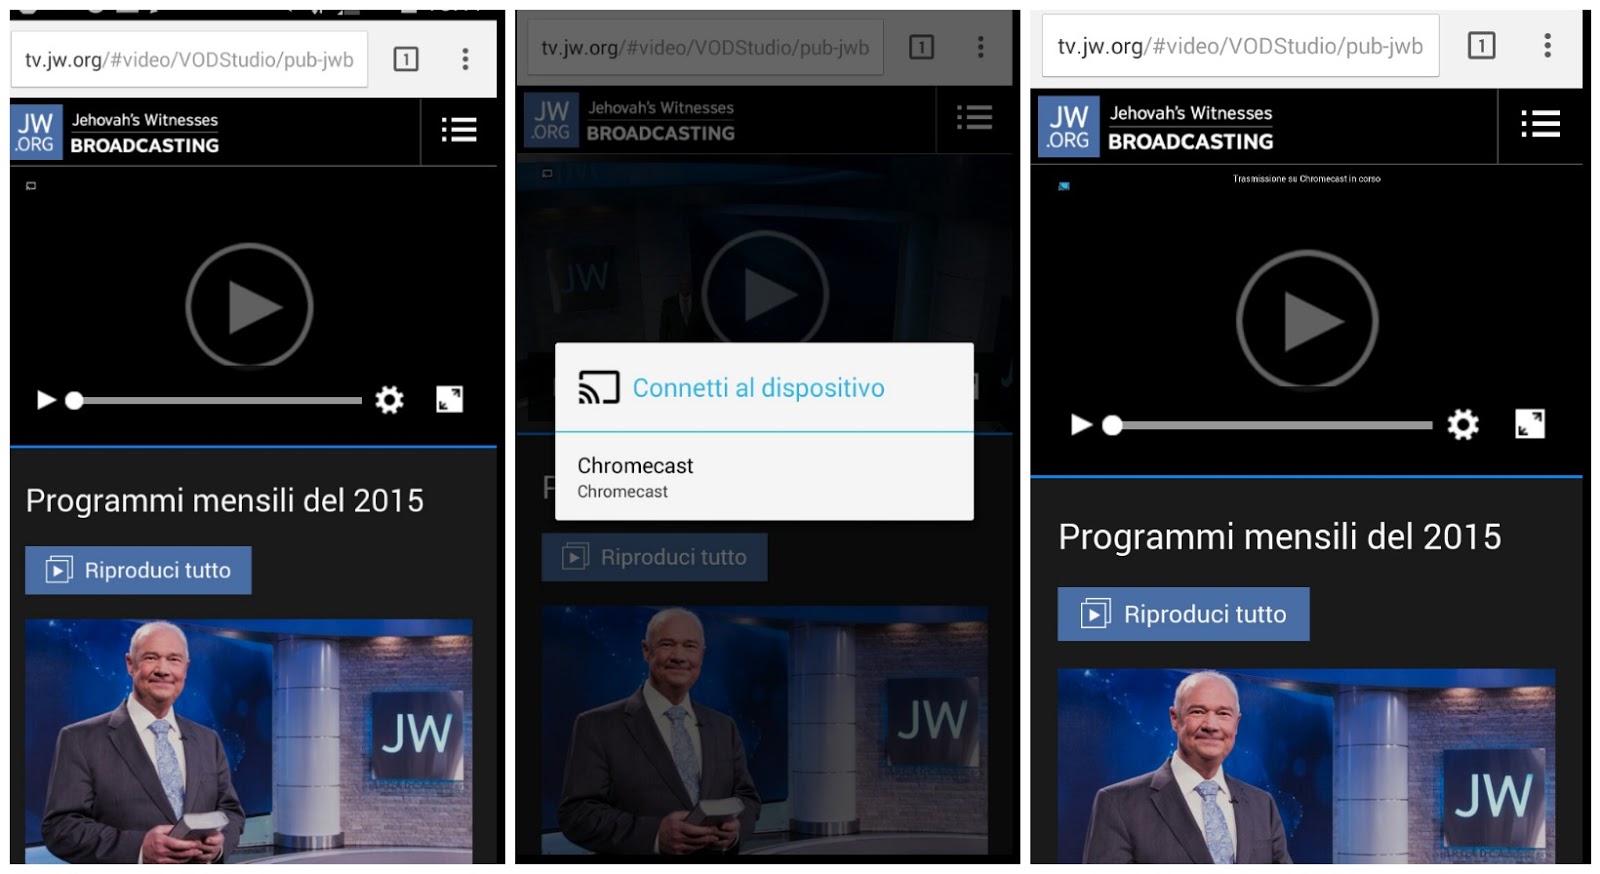 plasticitet tandlæge filter Come trasmettere i video di JW Broadcasting sulla TV con Chromecast